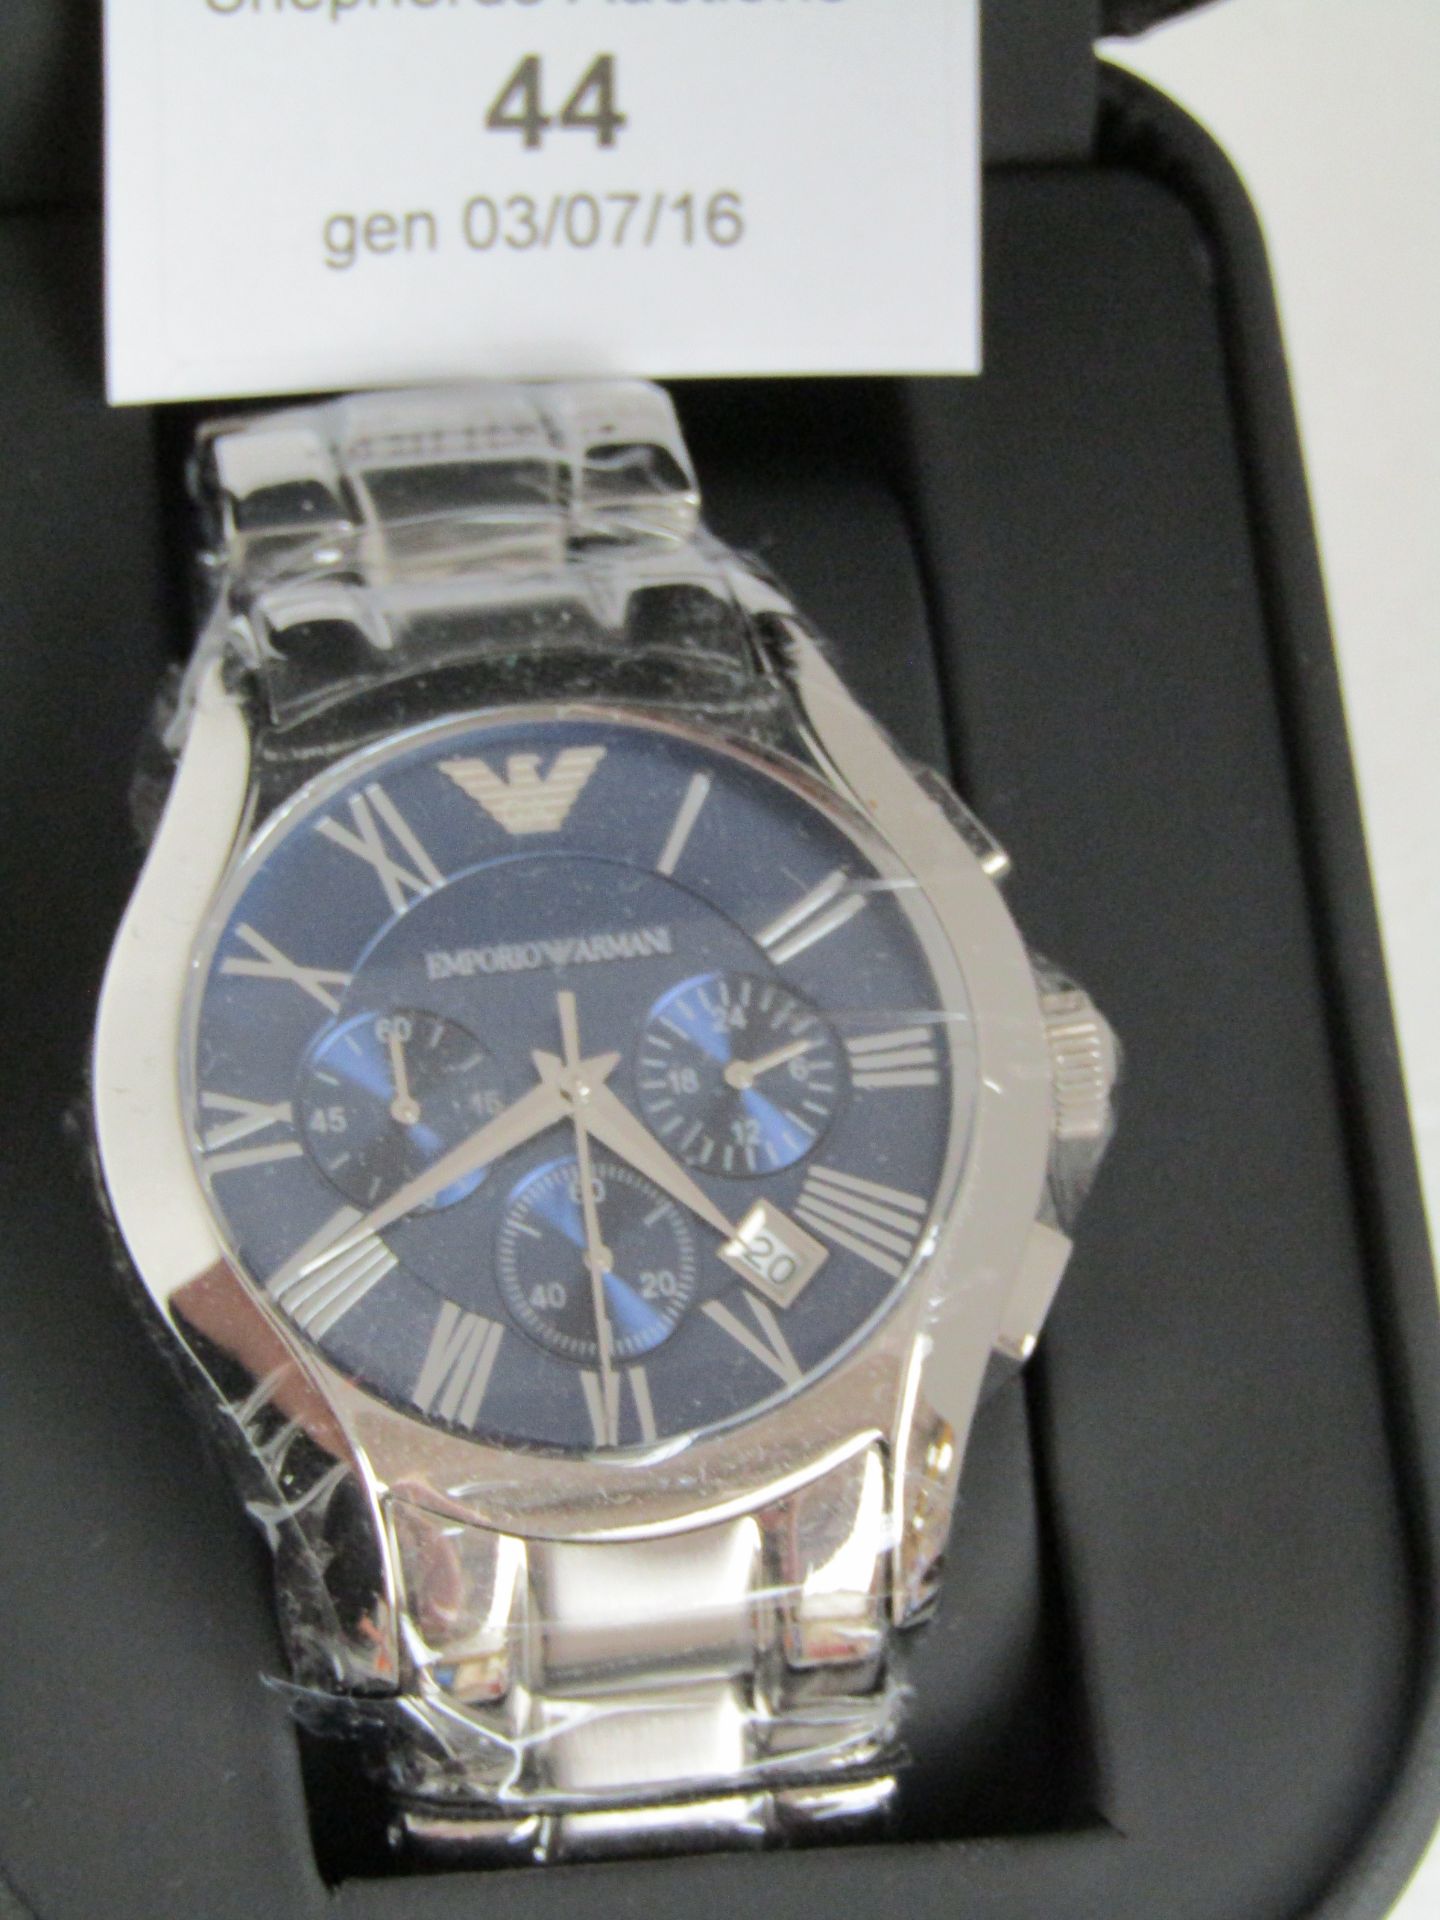 **NO VAT** Emporio Armani Men's Chronograph Watch (AR1635), RRP'd at £197.00 at www.watchshop.com.